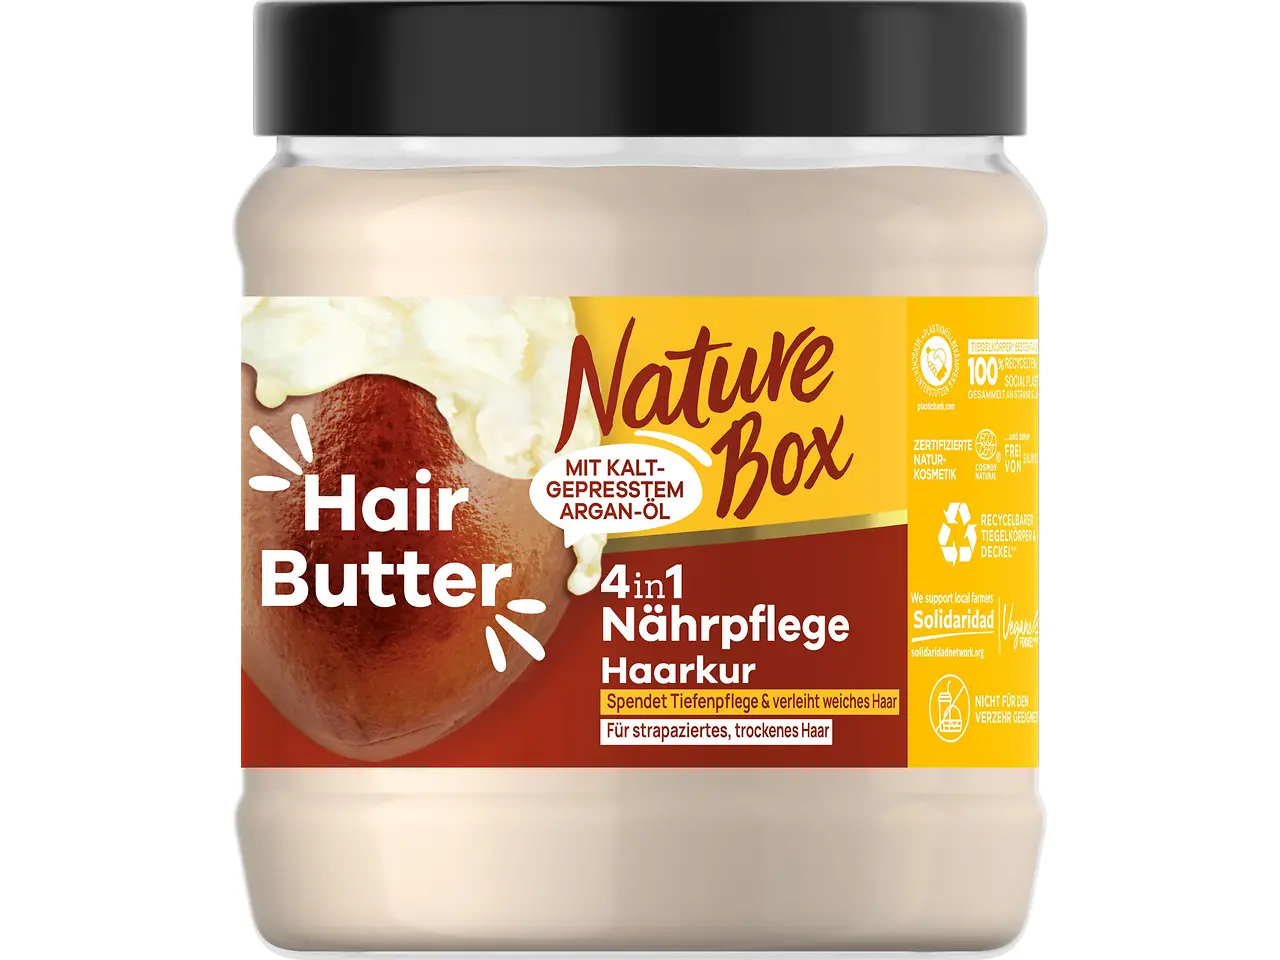 
Nature Box Hair Butter Nährpflege 4-in-1 Haarkur